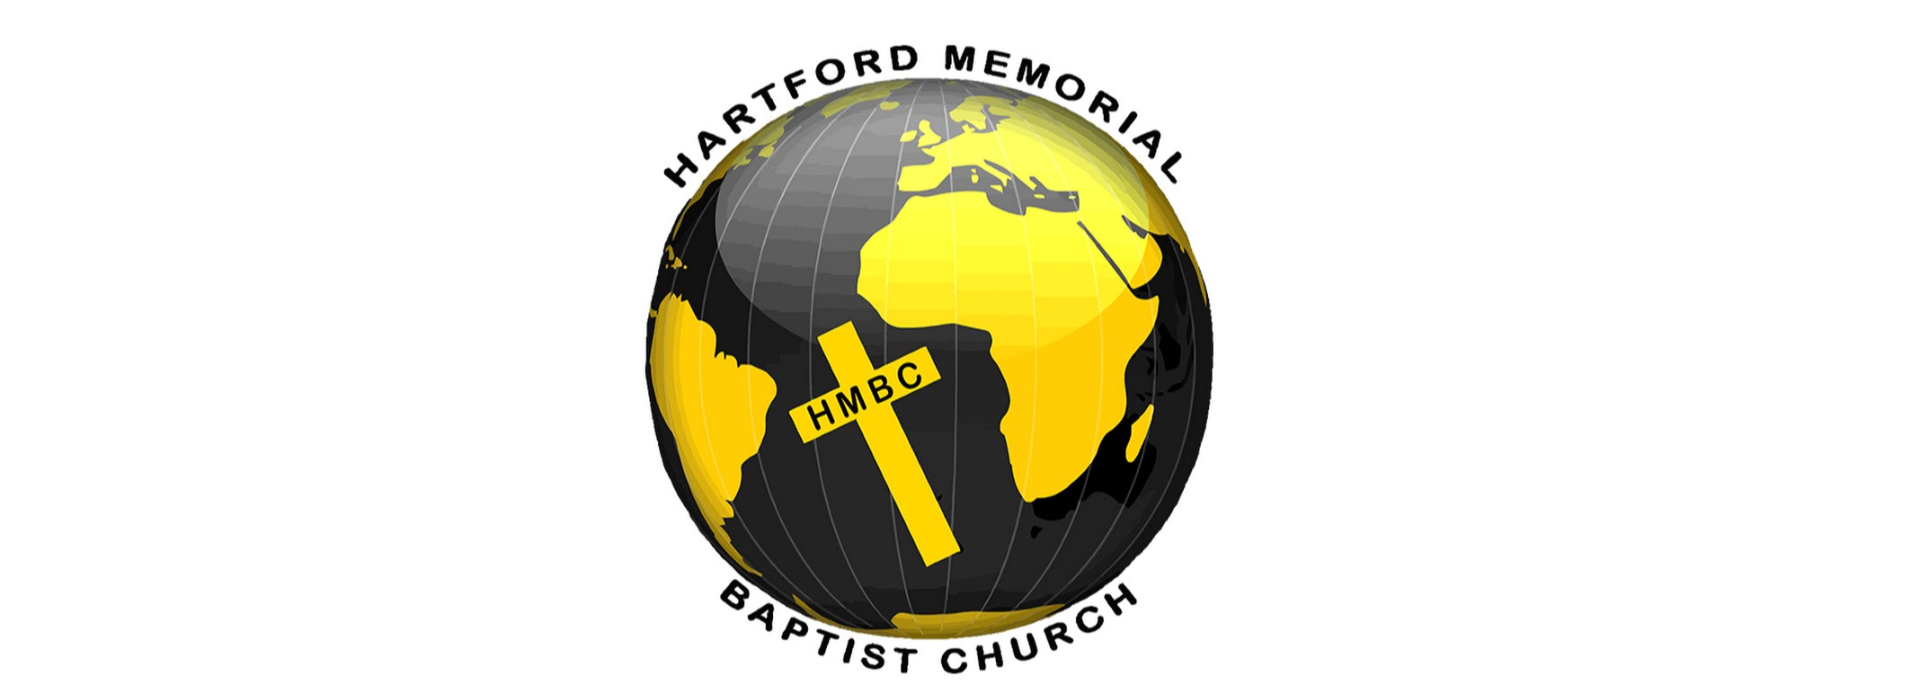 Hartford Memorial Baptist Church channel